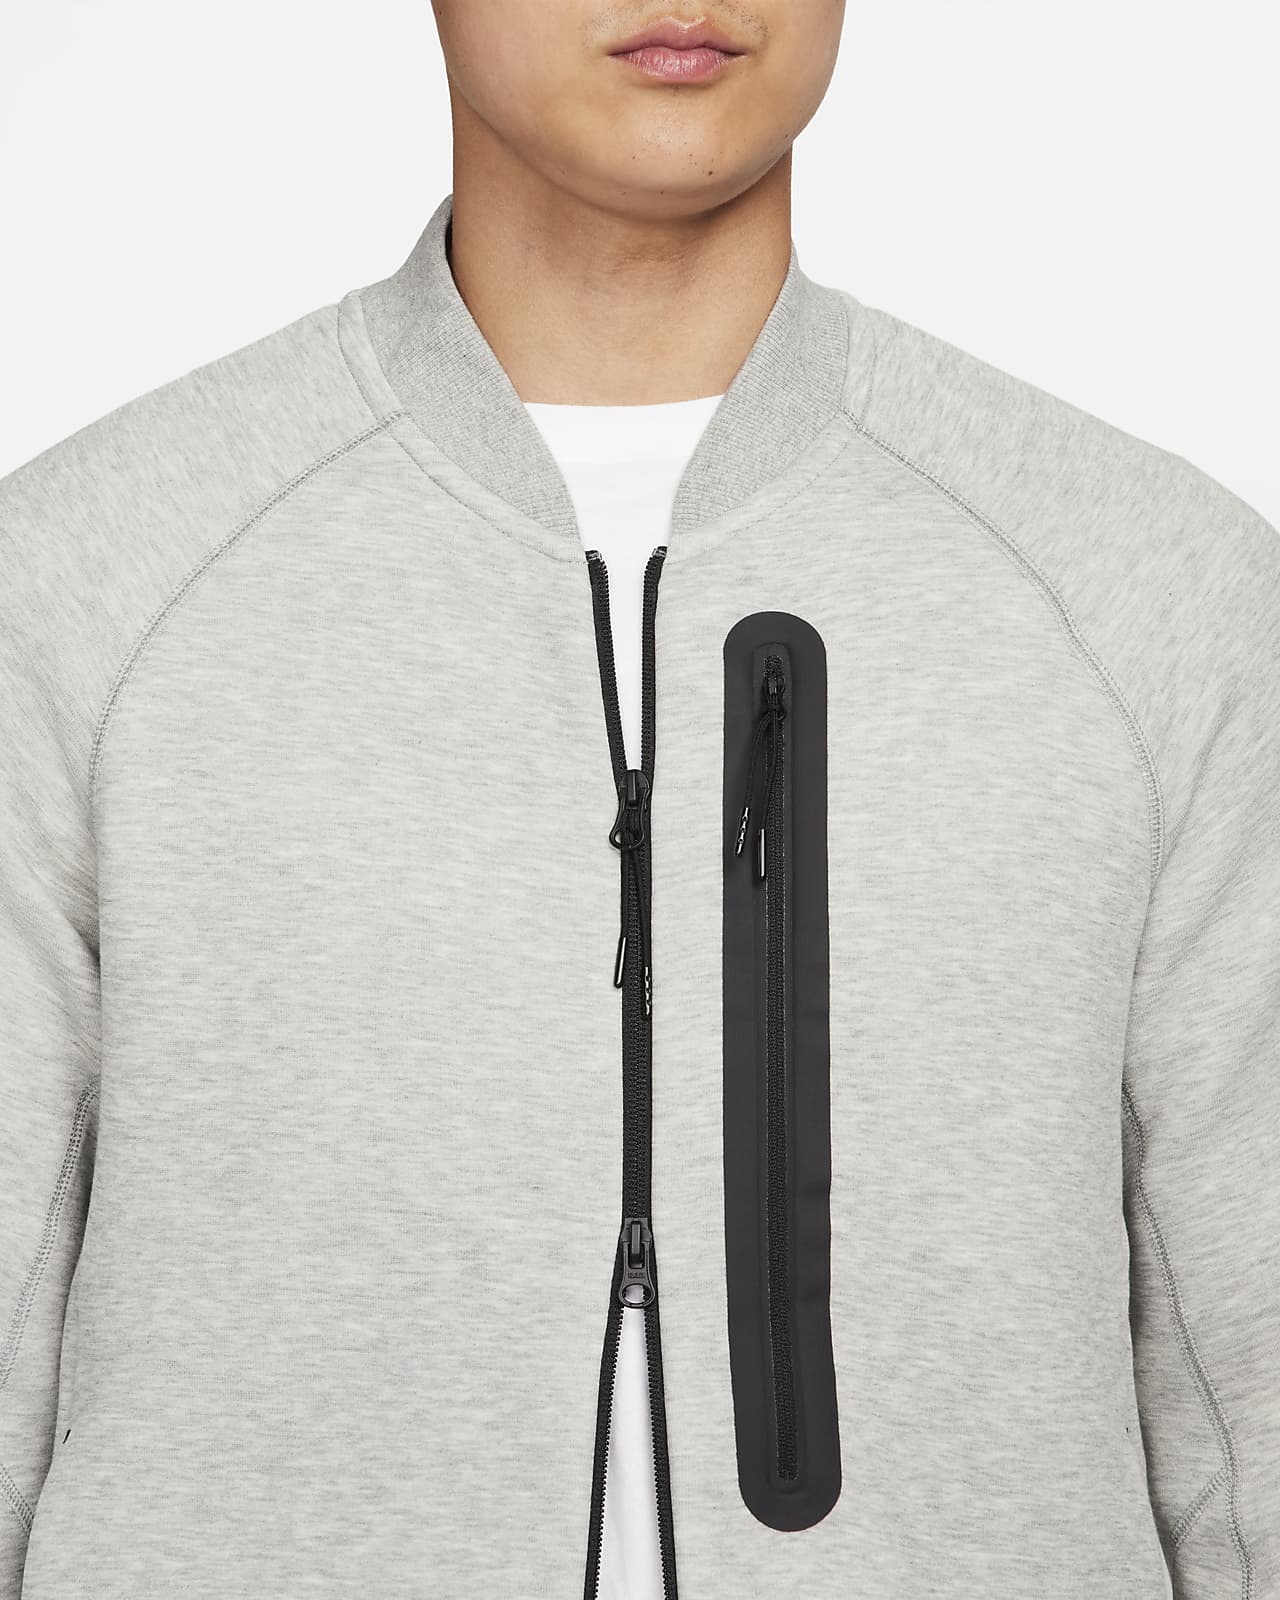 Nike Tech Fleece Black Activewear Jackets for Men for Sale